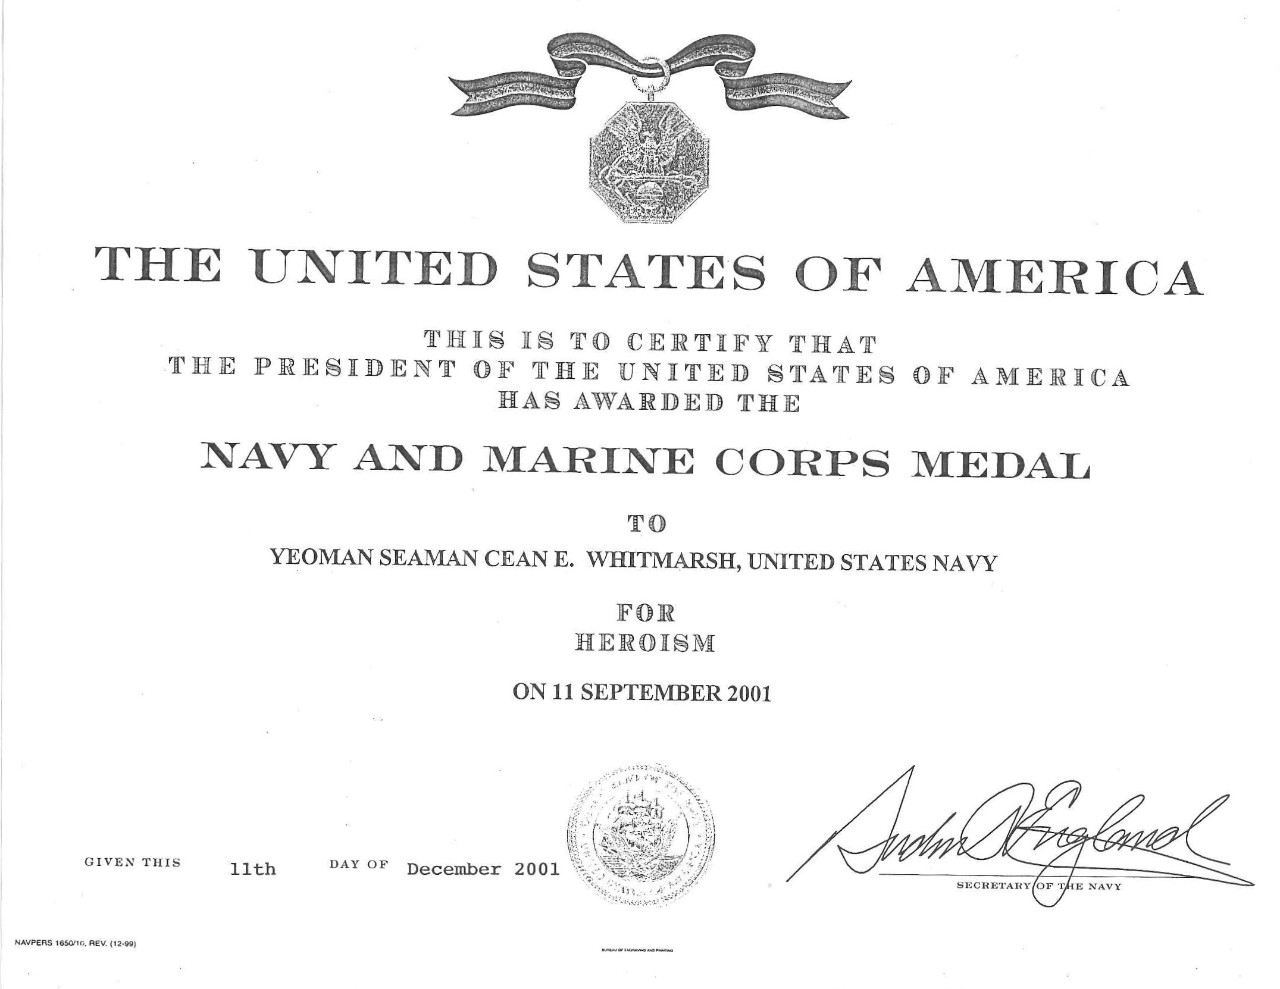 Whitmarsh, Cean YNSN Navy and Marine Corps Medal